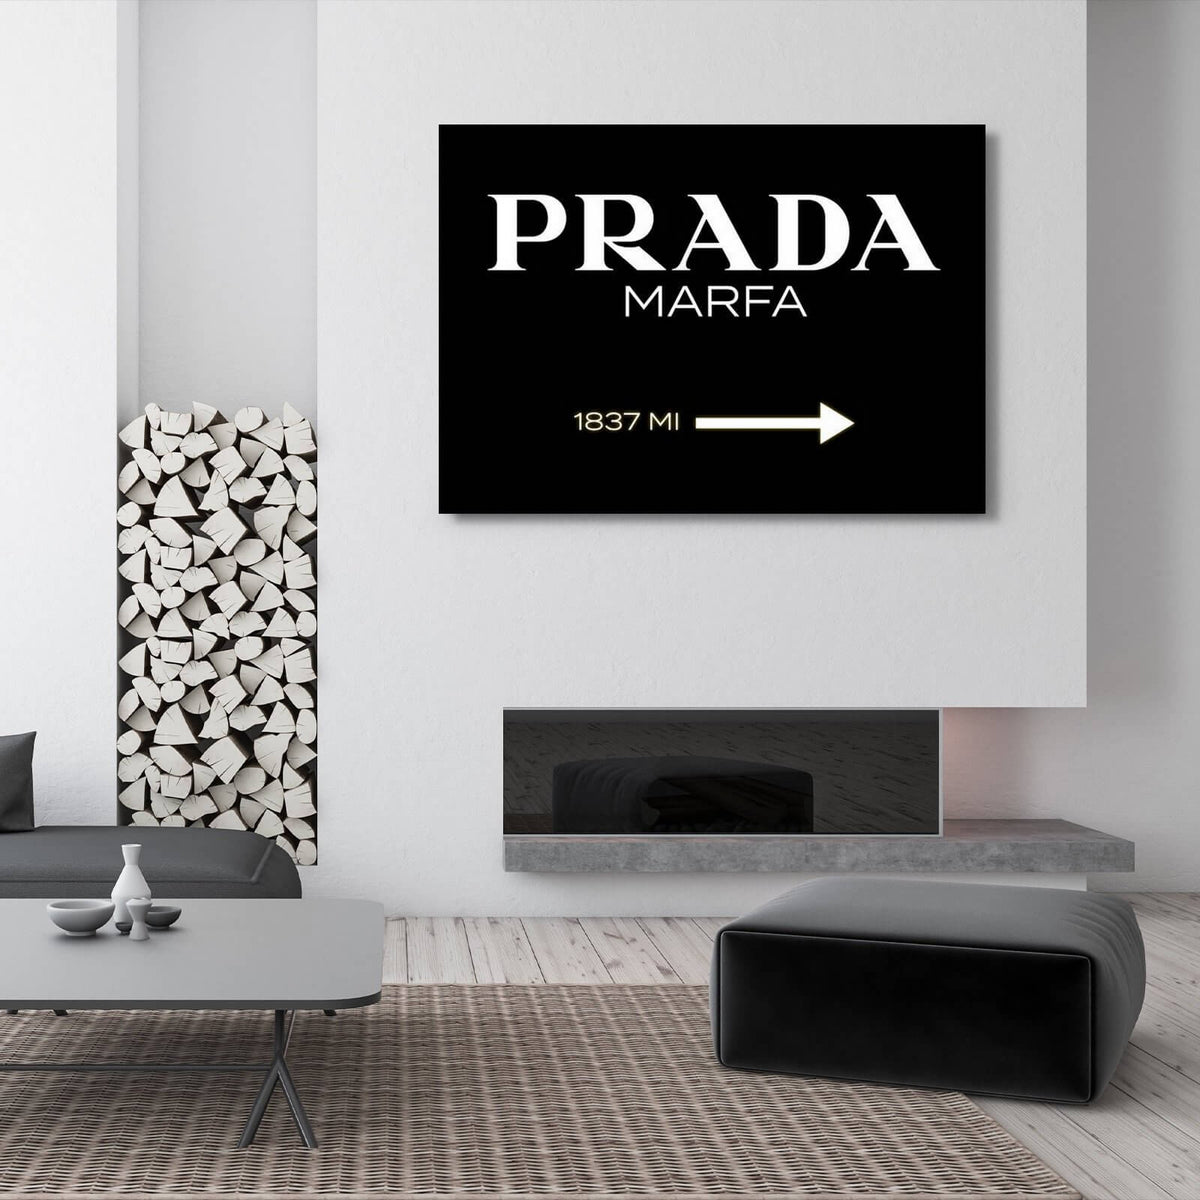 Prada Marfa Black Sign/Poster - Fashion Wall Art | MusaArtGallery™